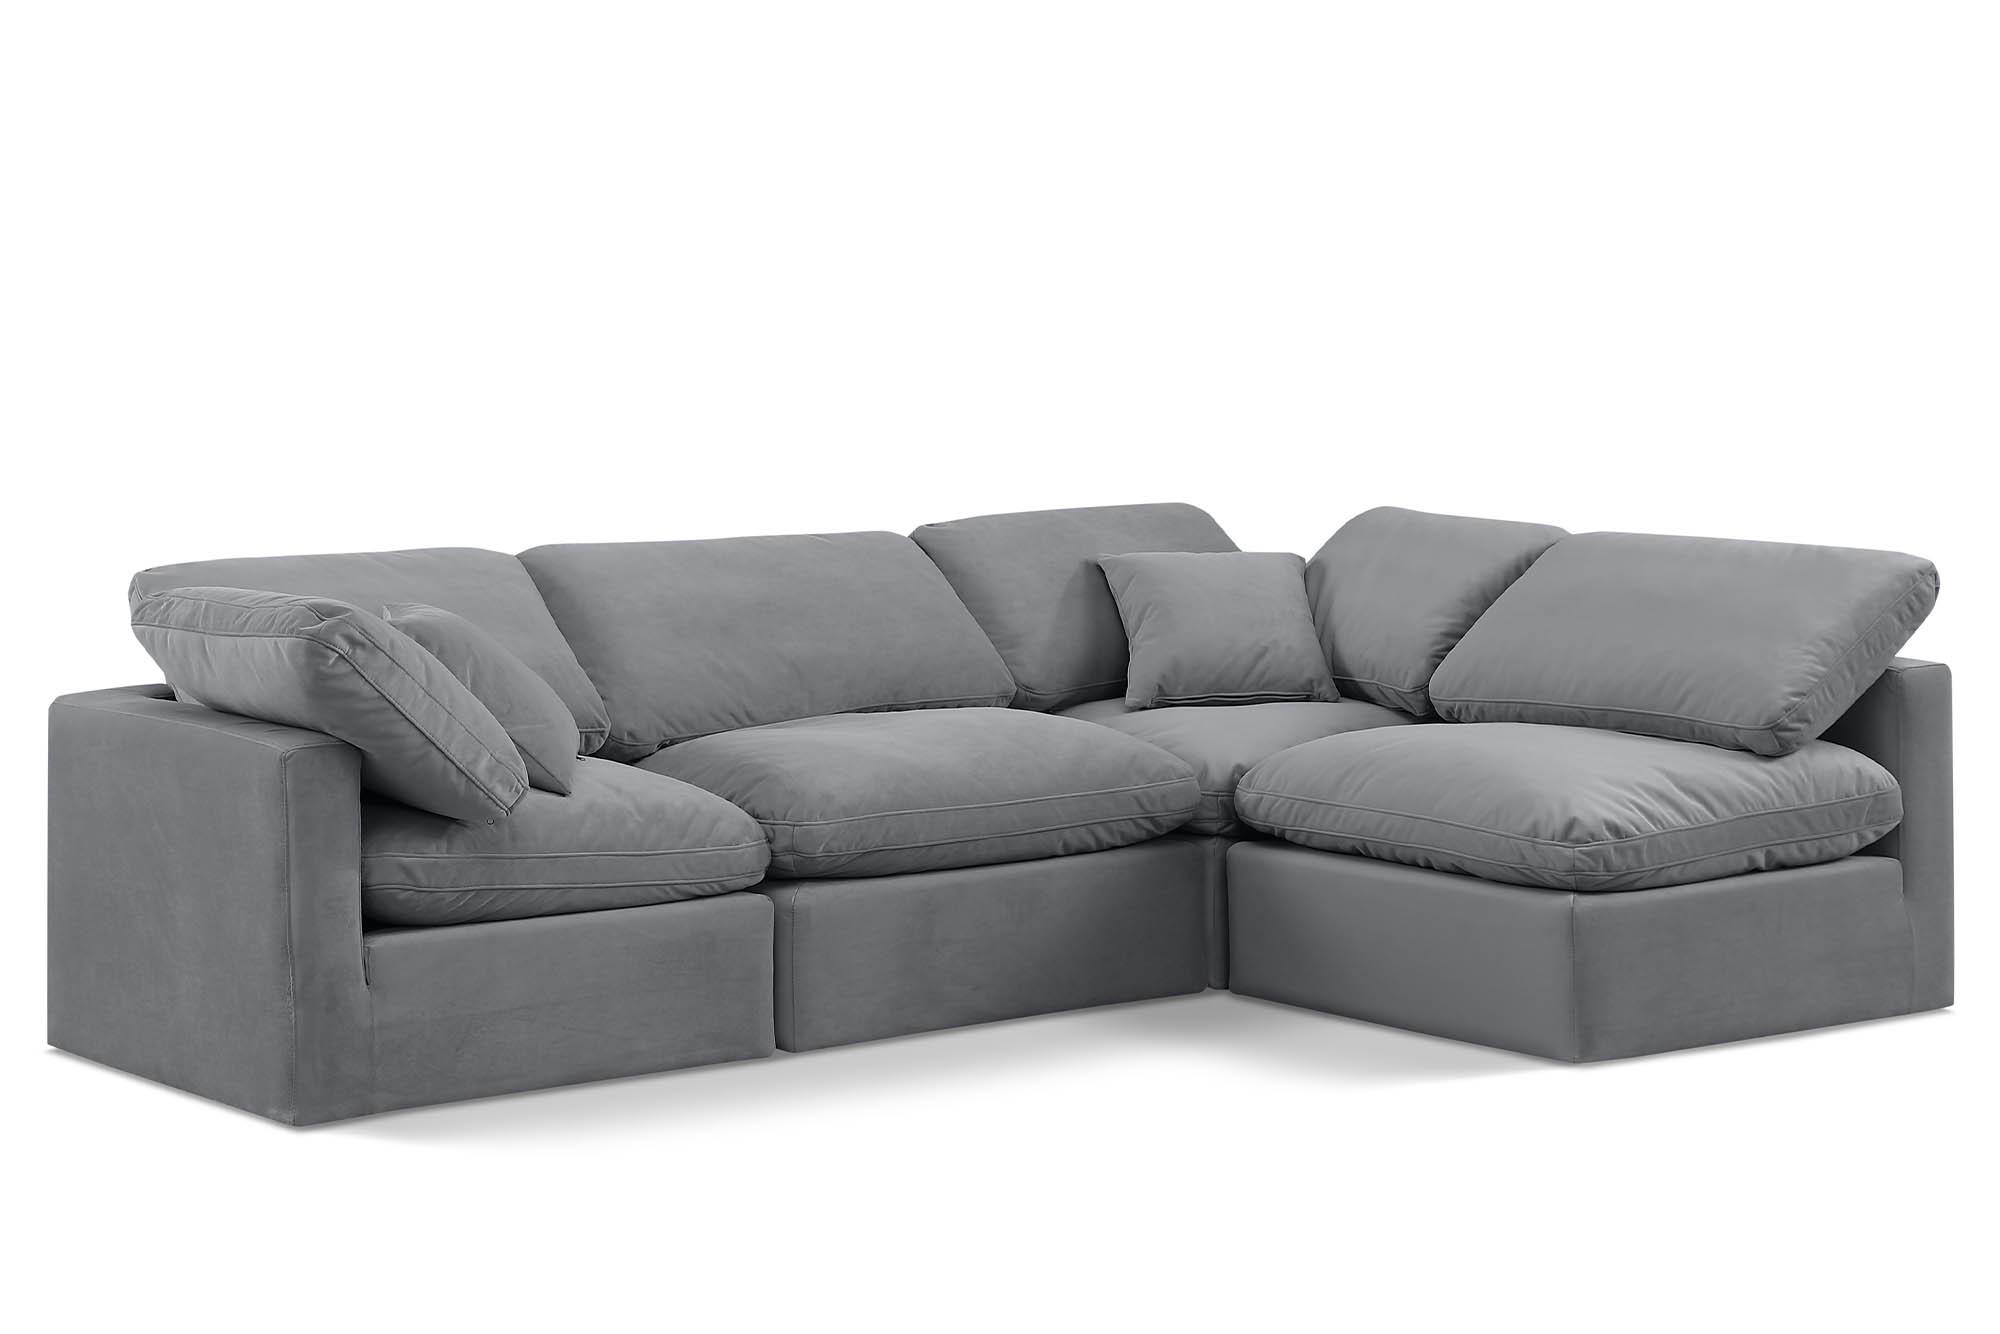 Contemporary, Modern Modular Sectional Sofa INDULGE 147Grey-Sec4B 147Grey-Sec4B in Gray Velvet